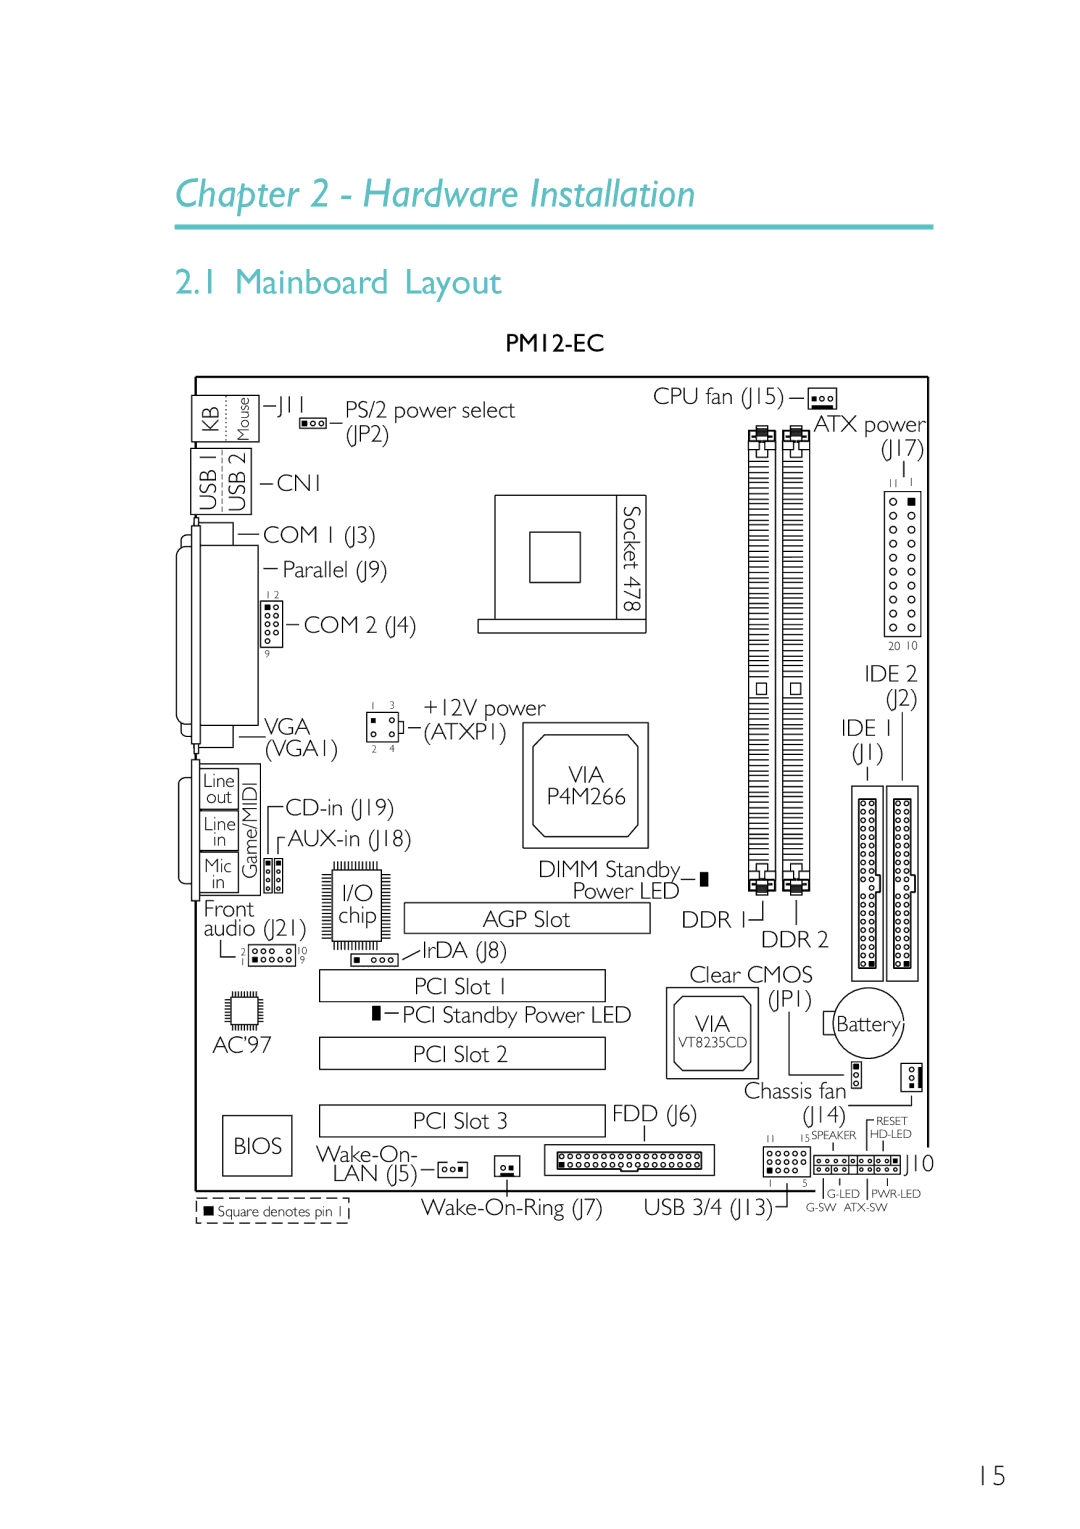 DFI PM12-EC, PM12-EL user manual Mainboard Layout 